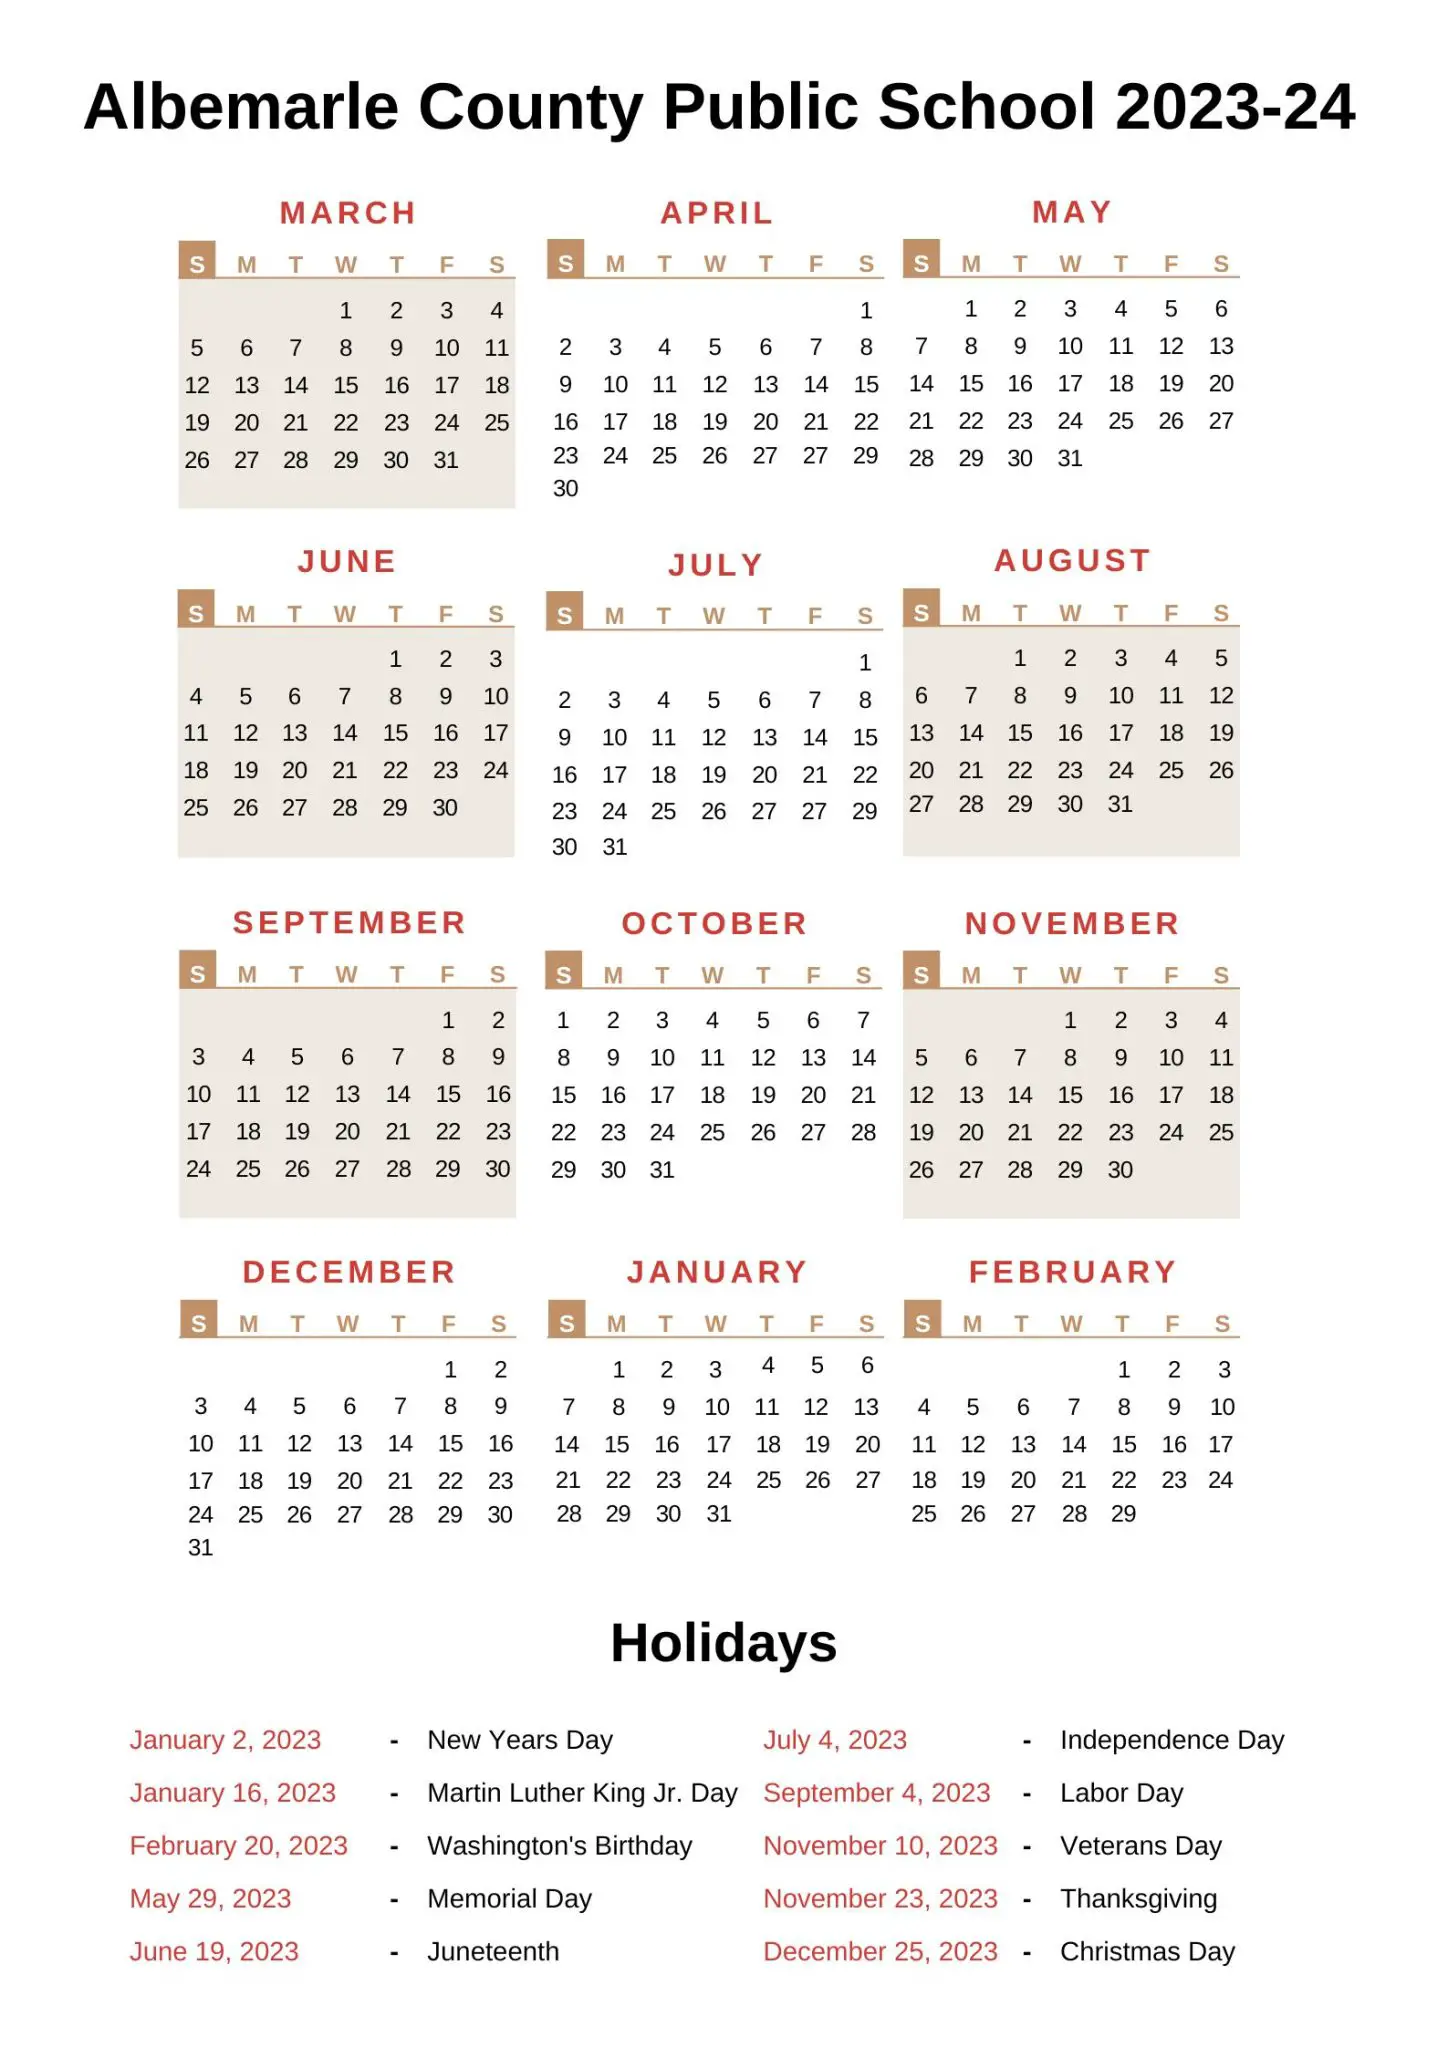 Albemarle County Public Schools Calendar 2023 24 with Holidays